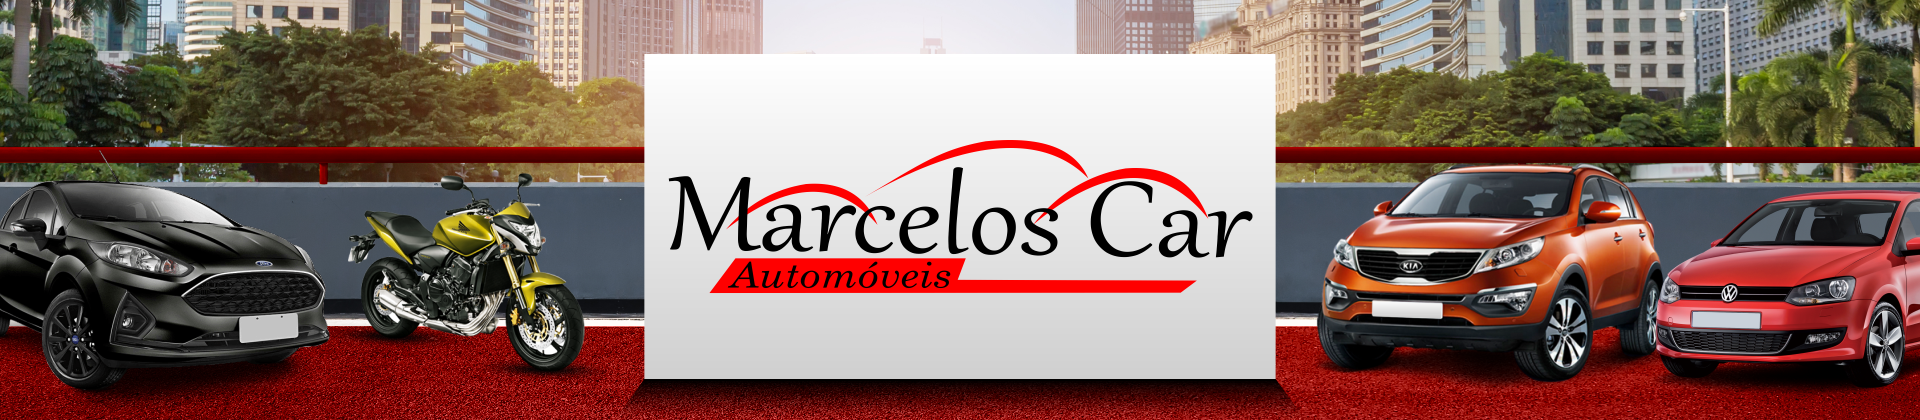 Marcelos Car Automóveis